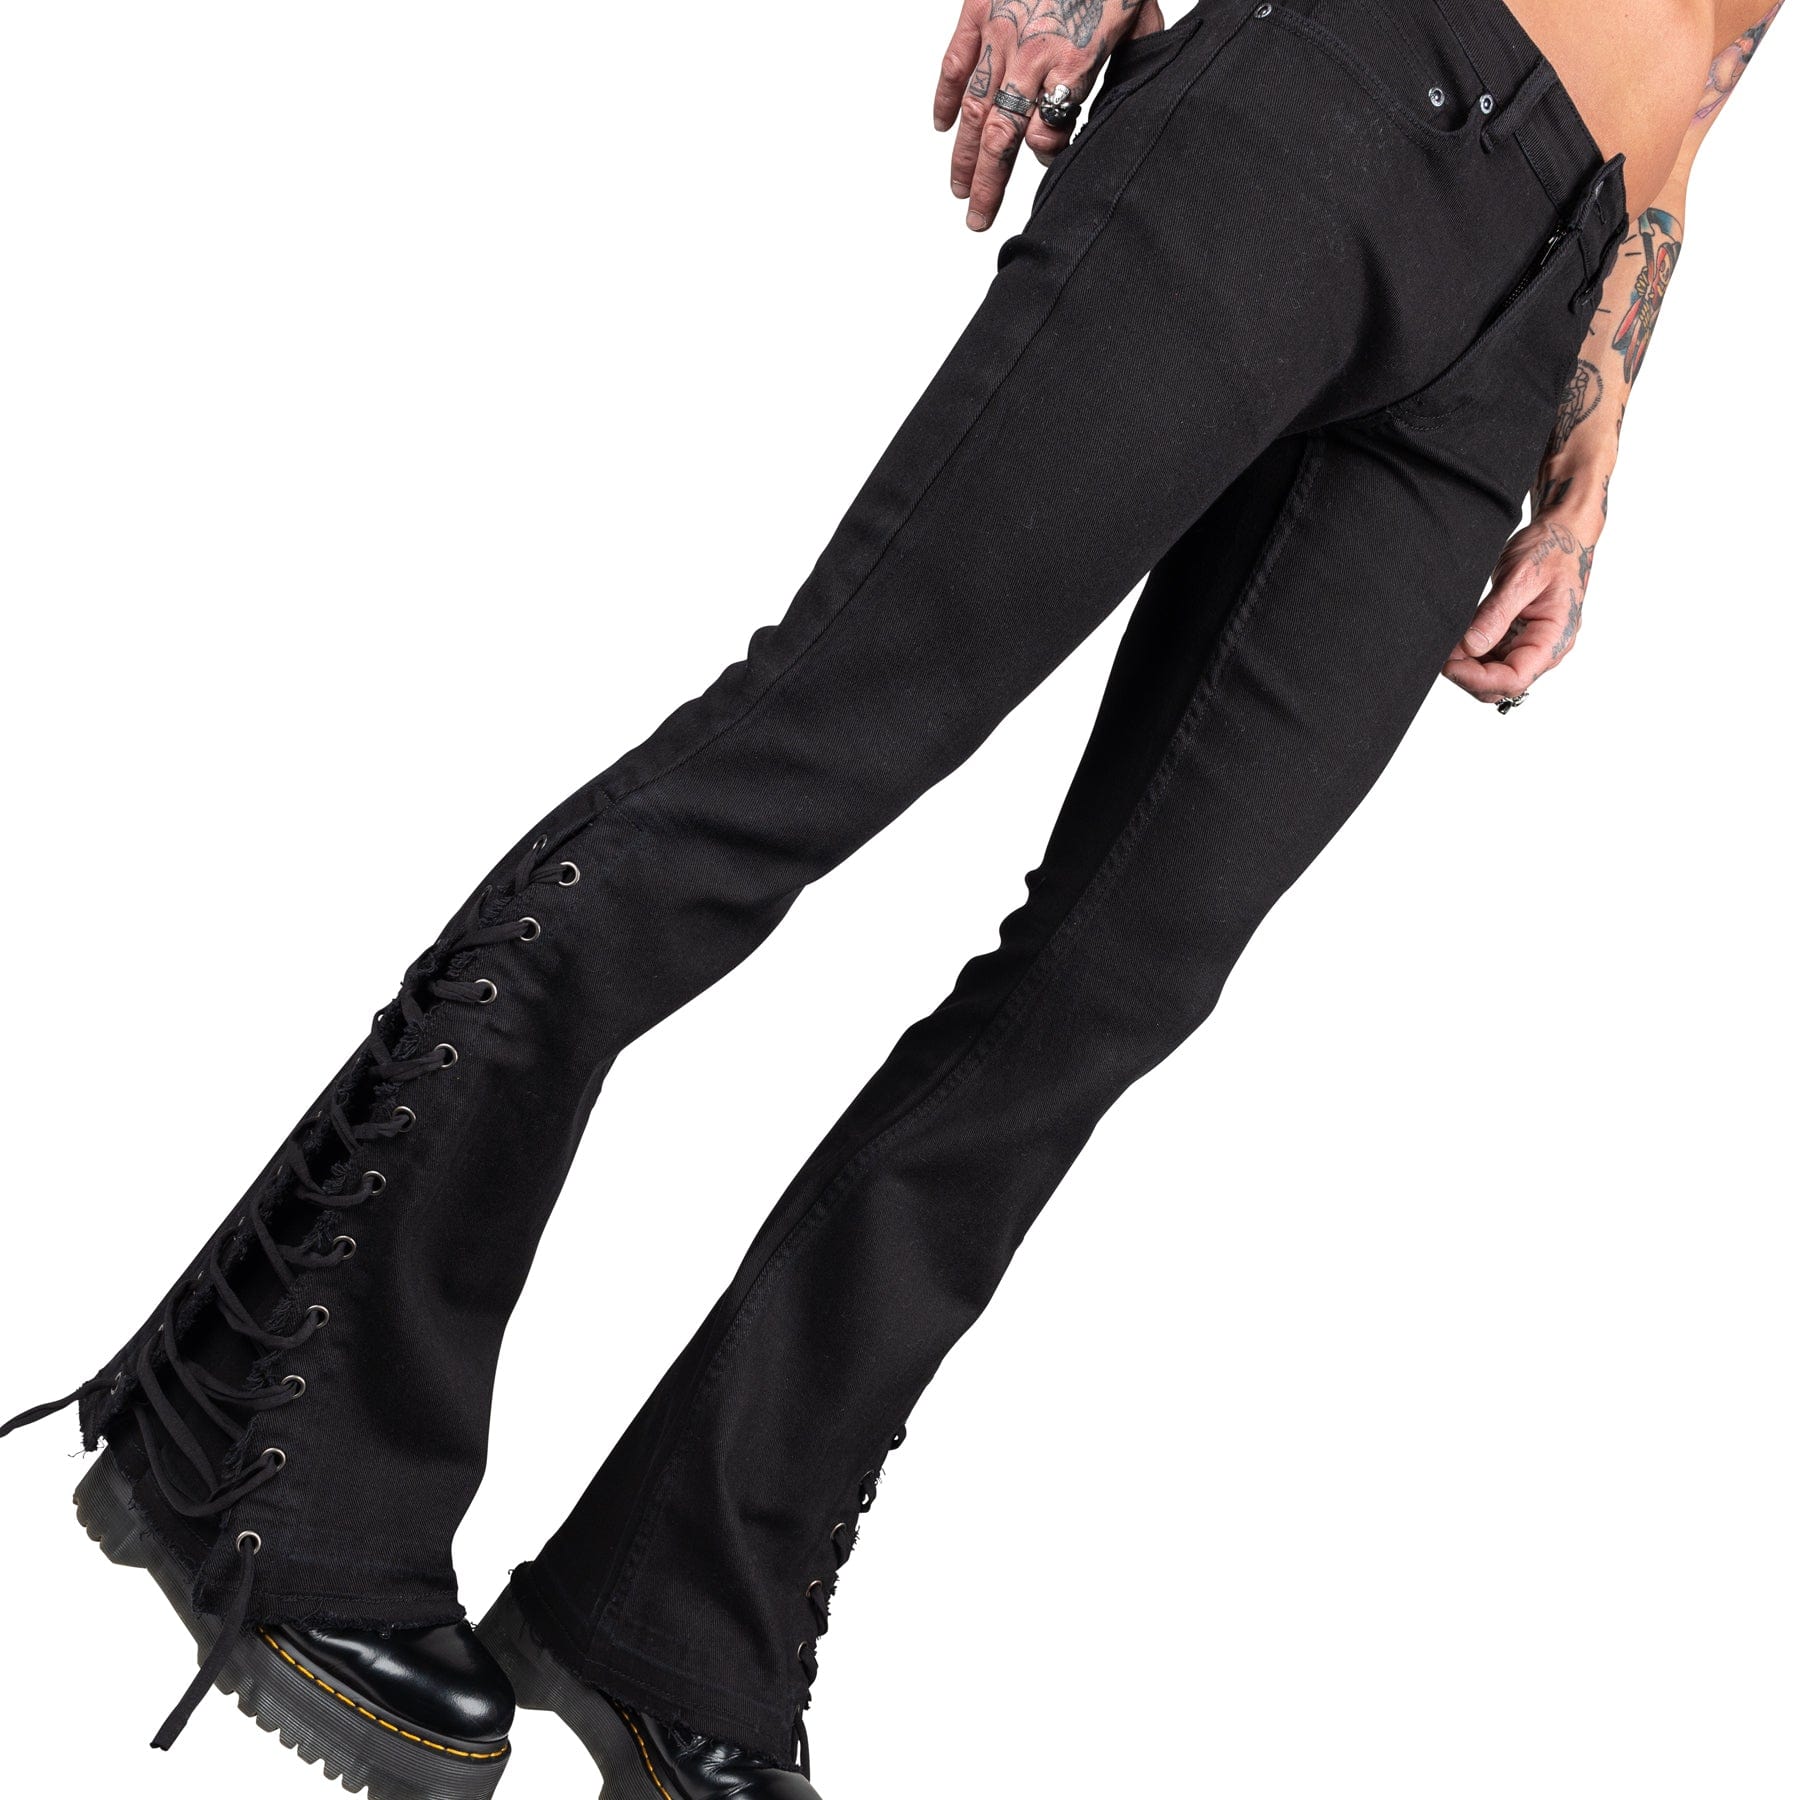 Wornstar Clothing Mens Jeans. Cutlass Blackout Denim Stage Pants - Black